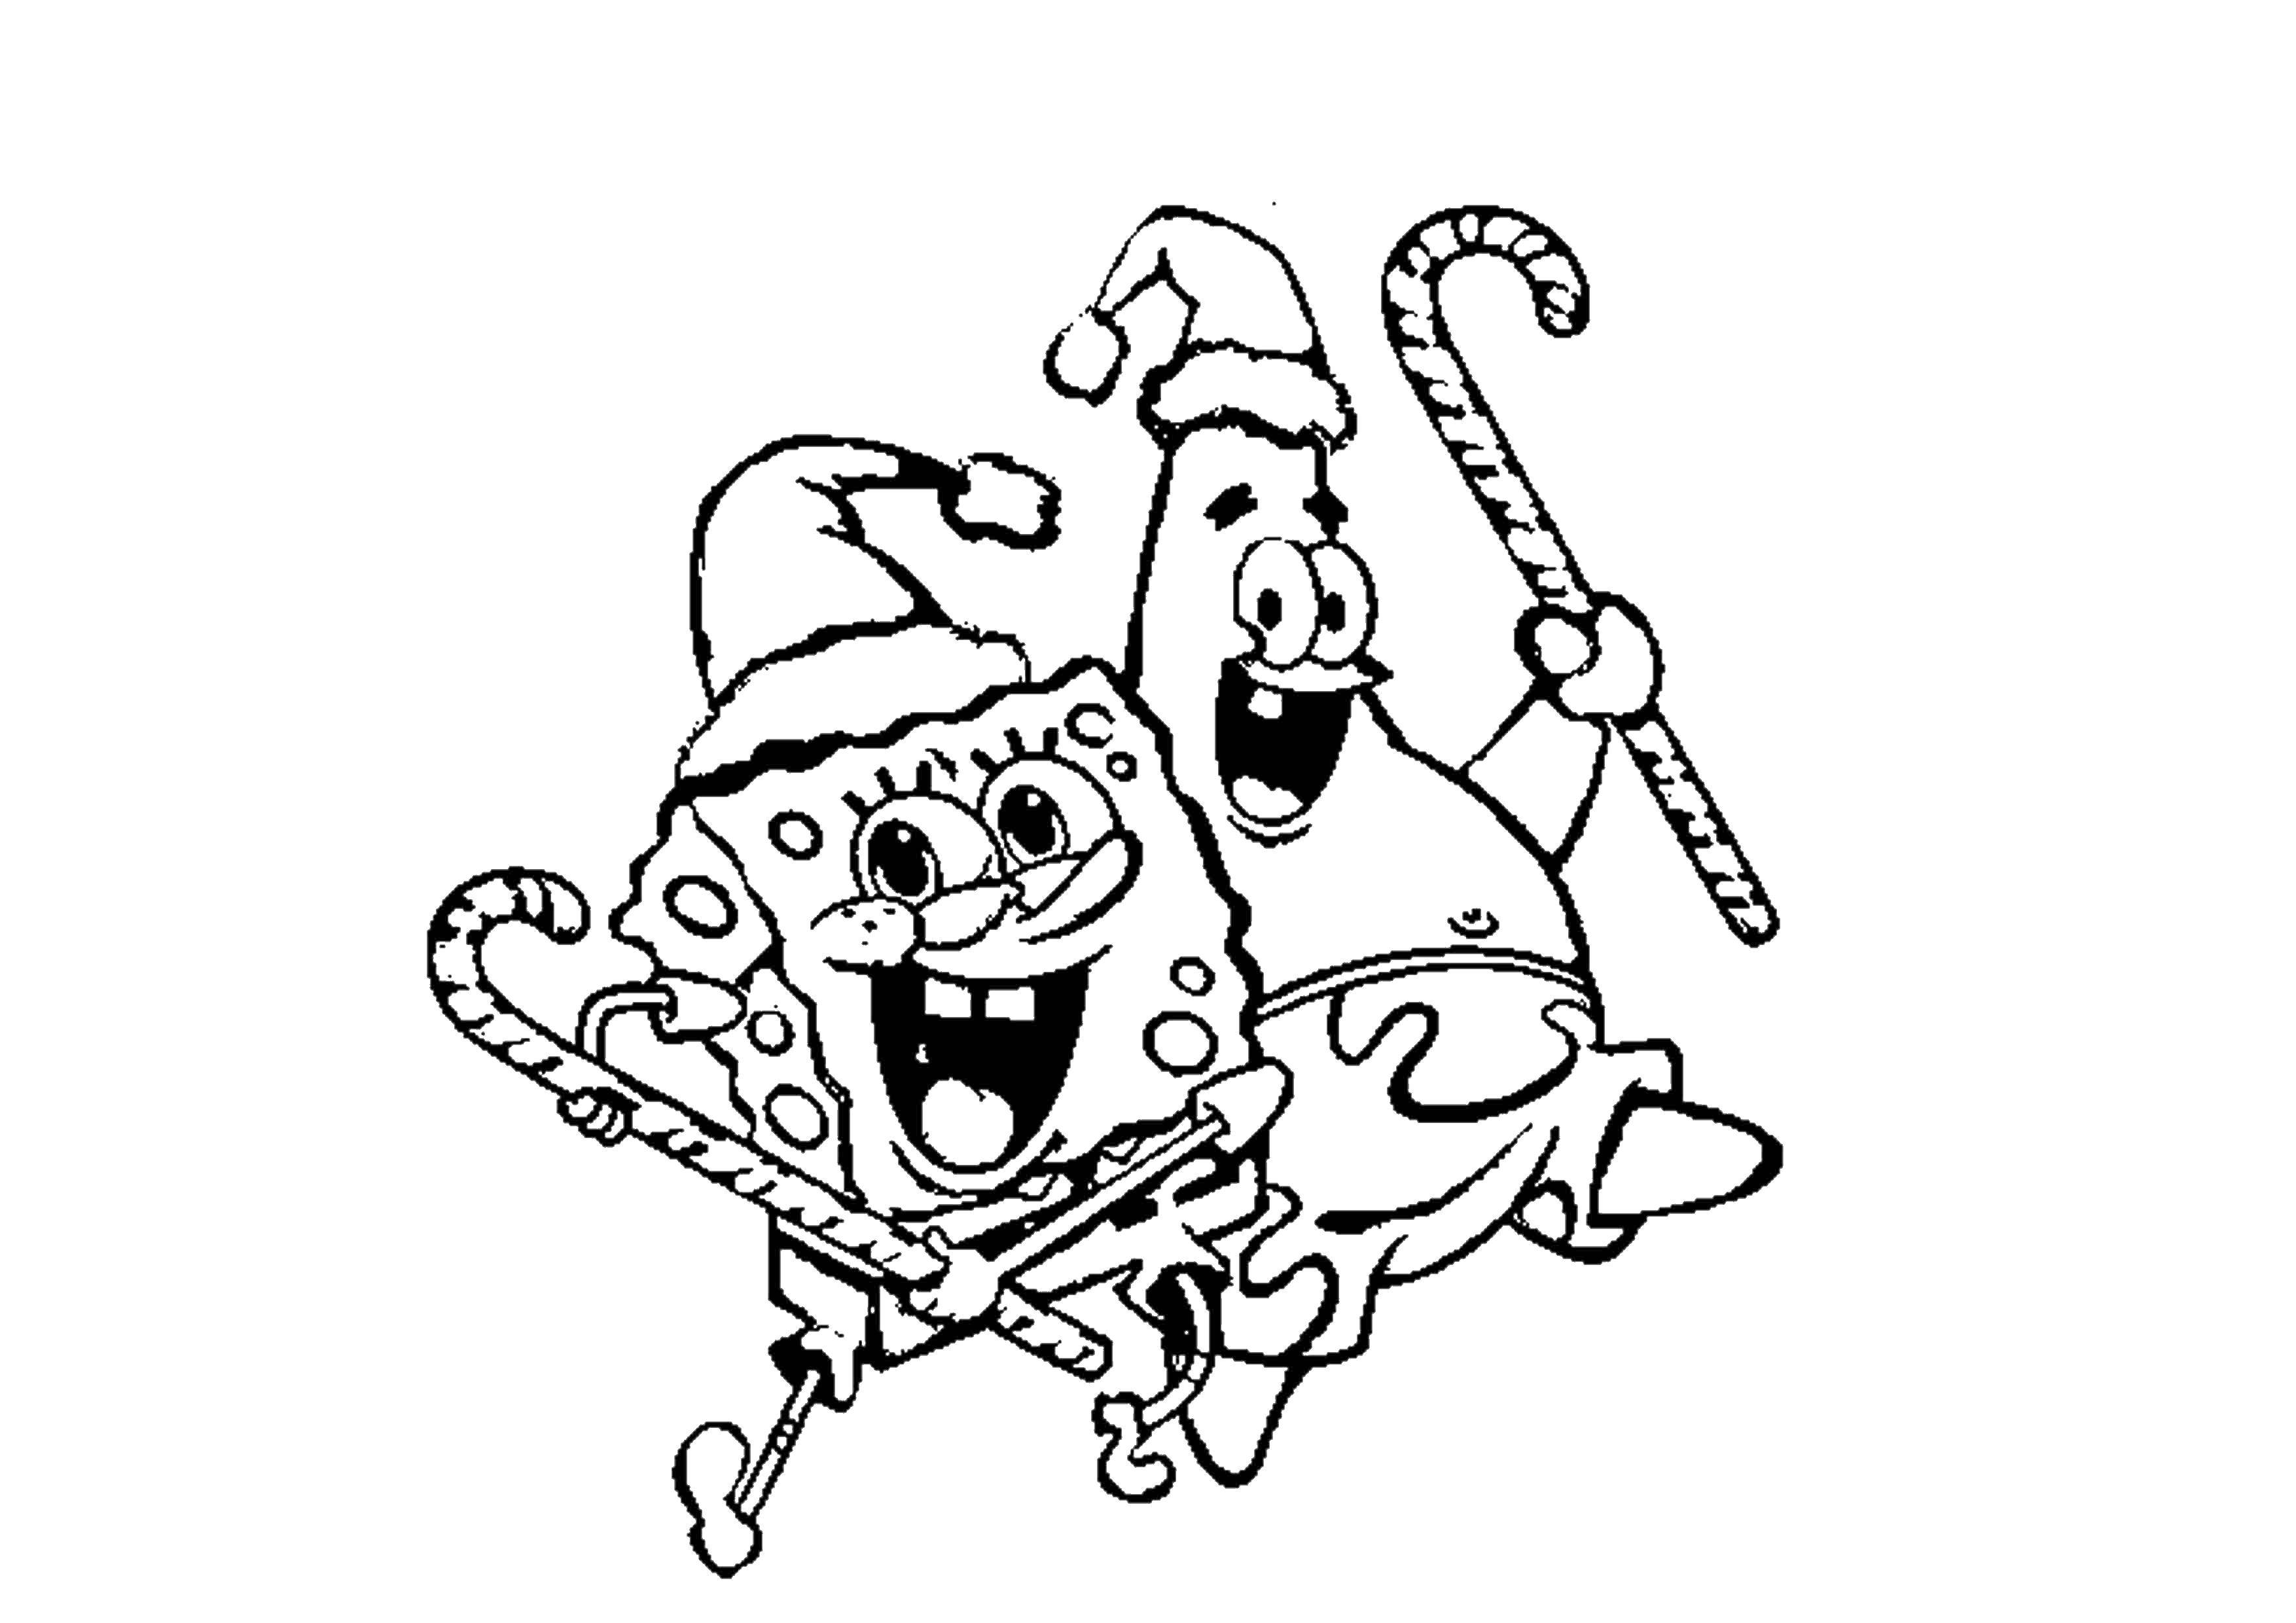 Coloring Spongebob and Patrick. Category Cartoon character. Tags:  Cartoon character, spongebob, spongebob, Patrick.